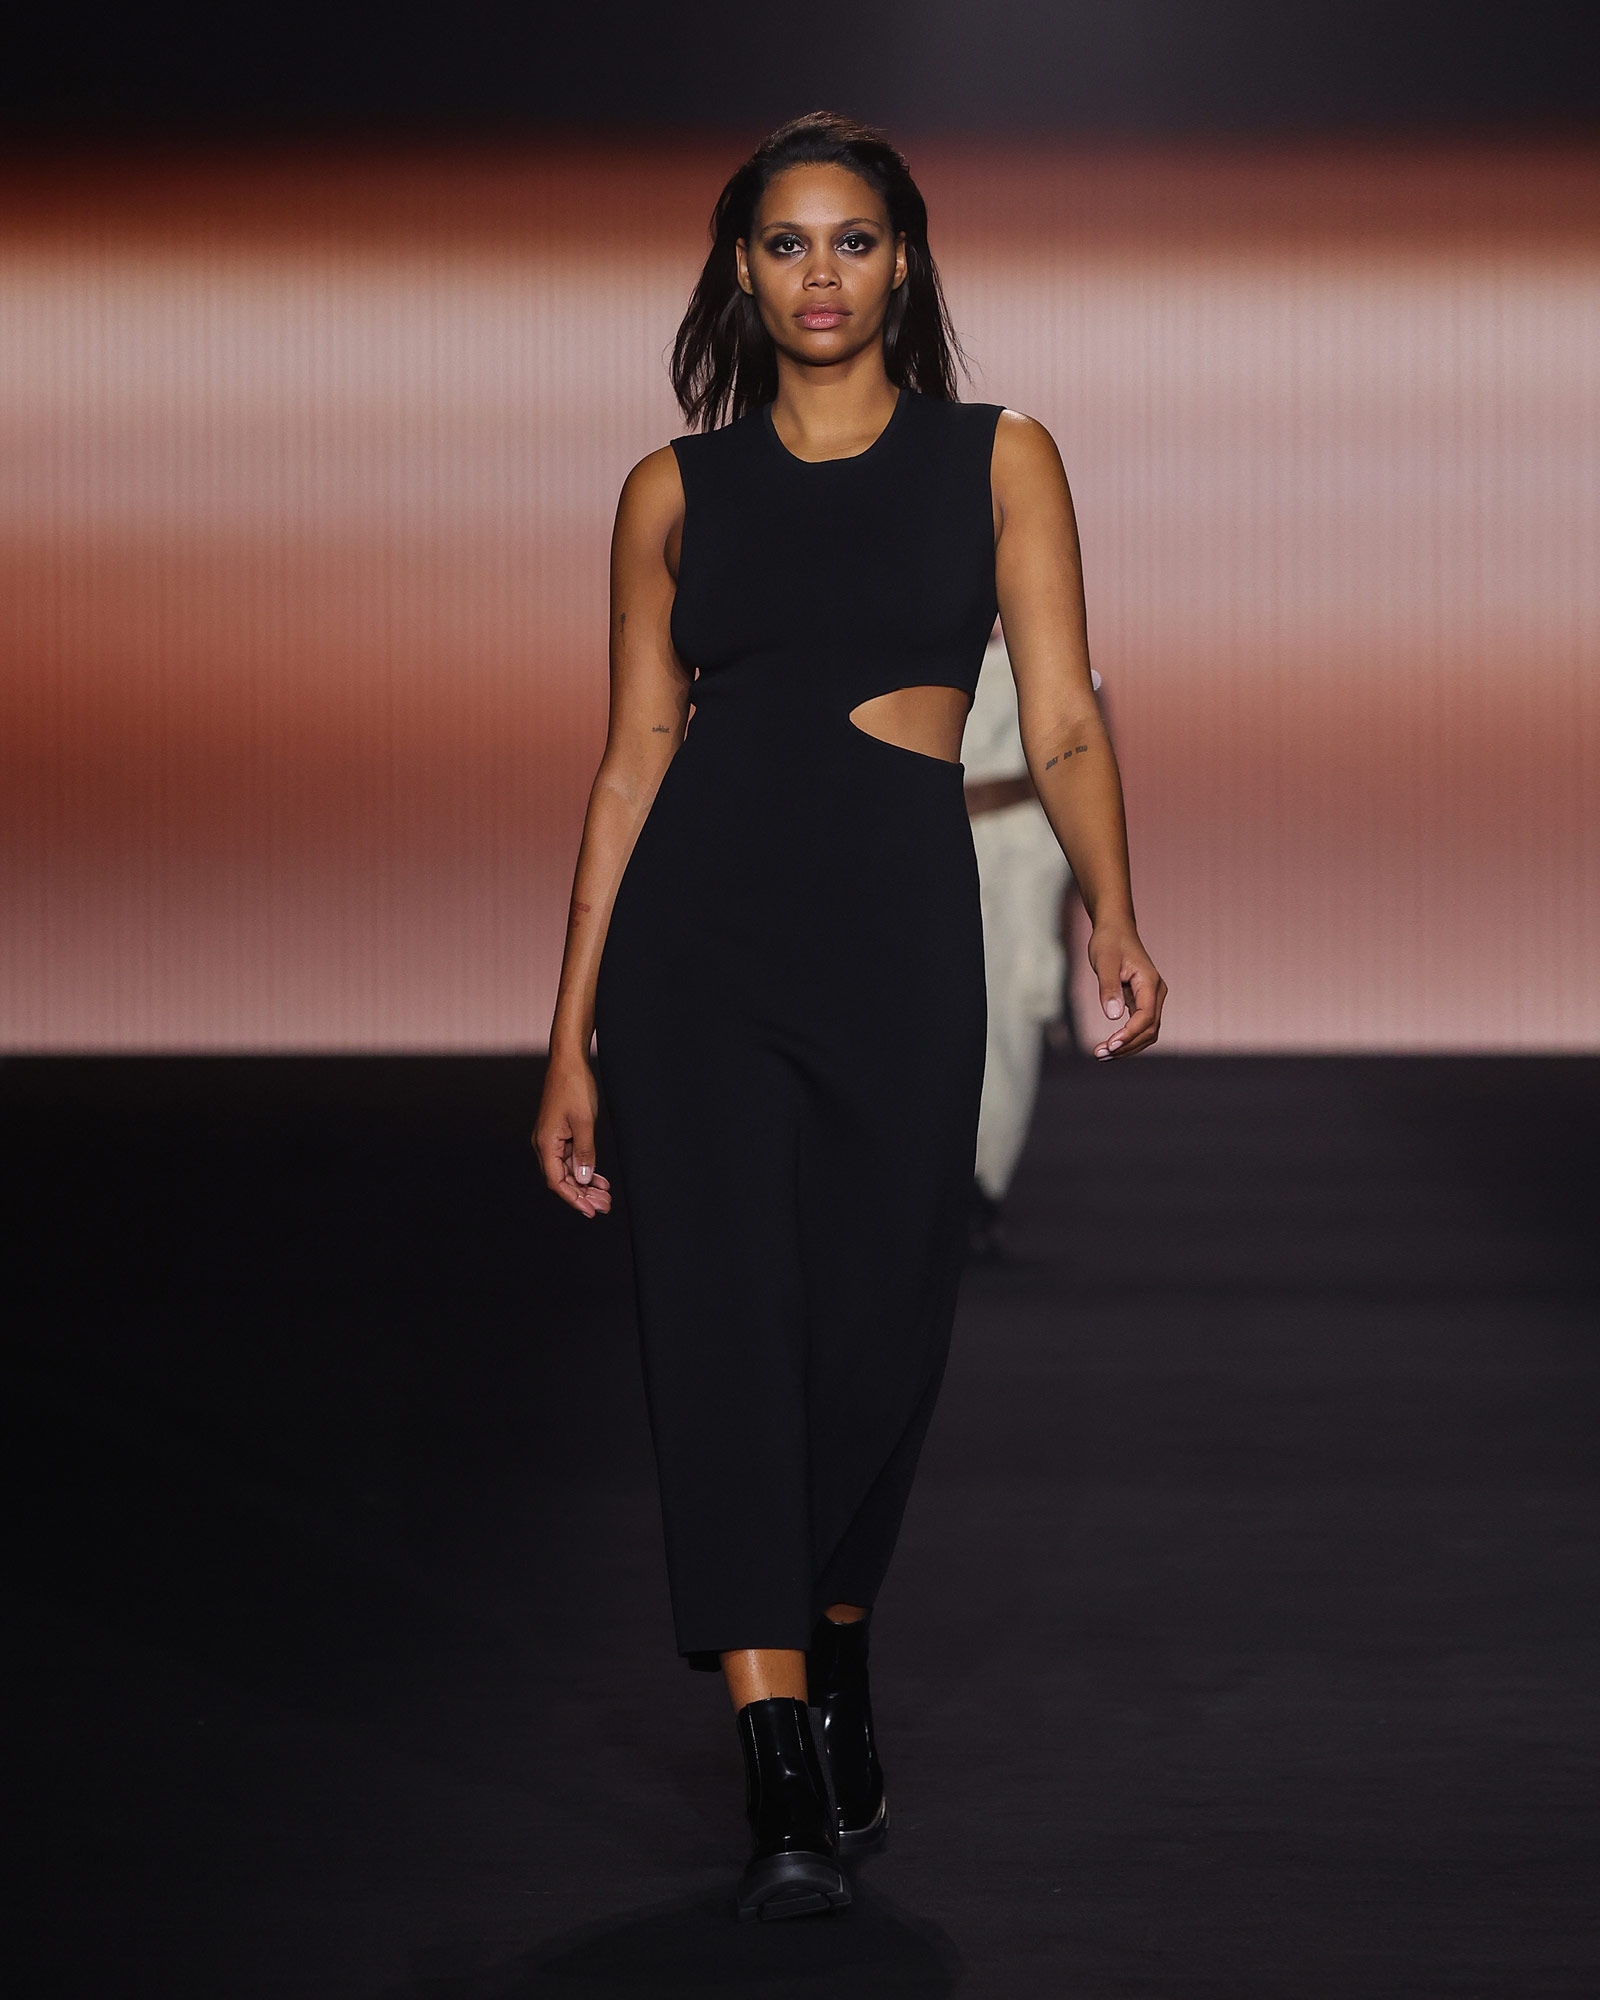 Knitwear | Milano Cut-Out Midi Dress | 990 Black